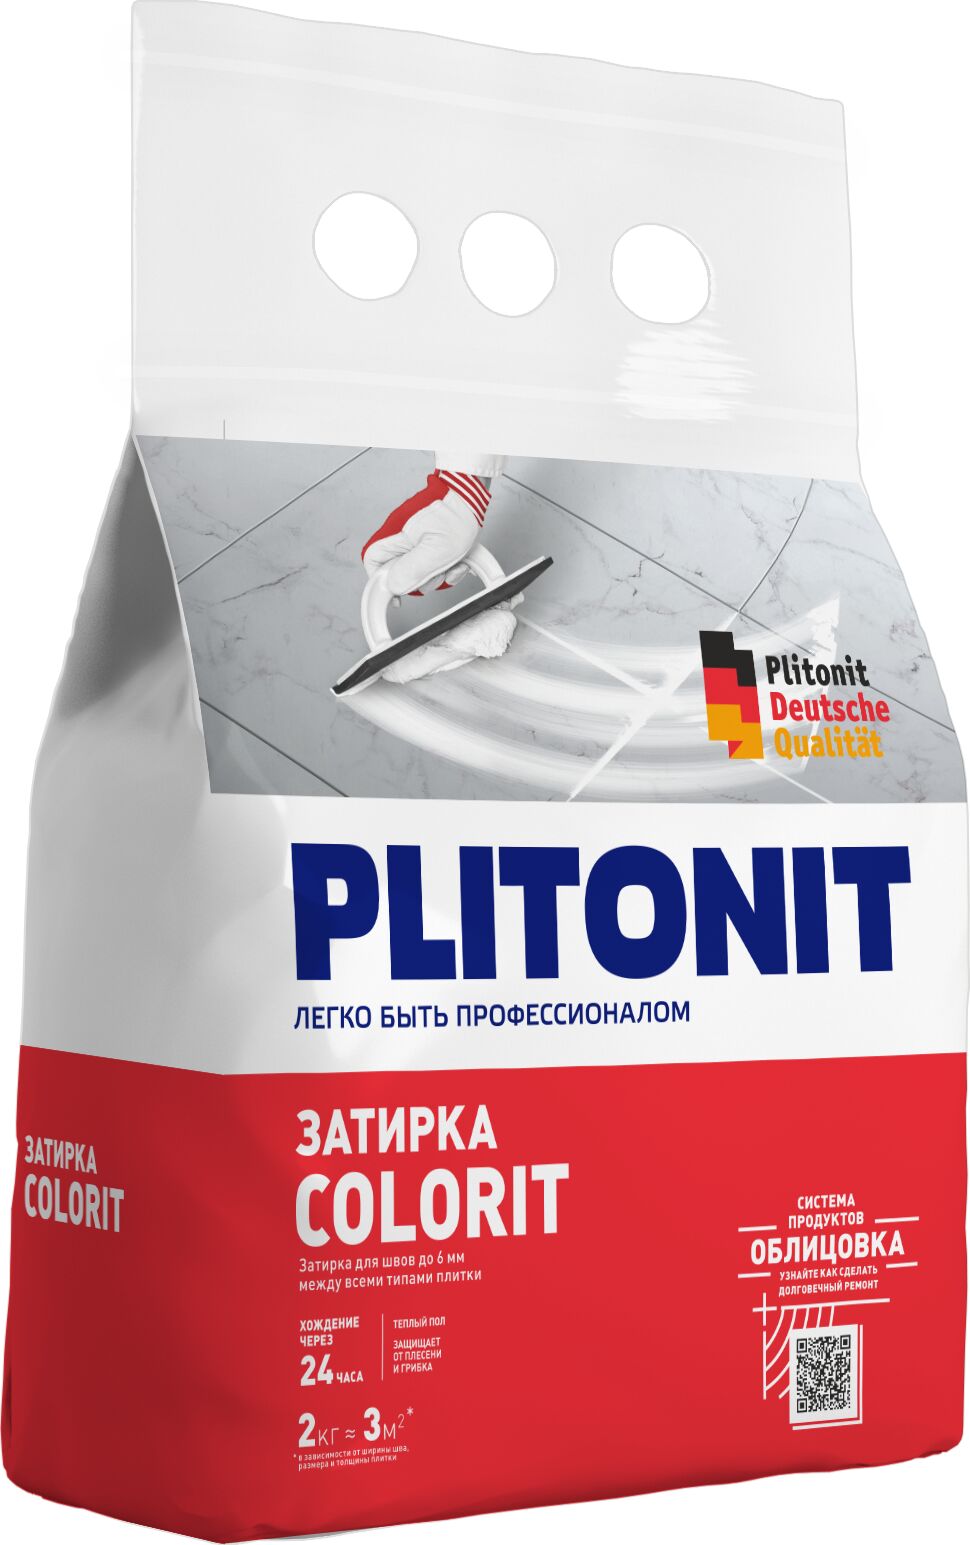 PLITONIT Colorit затирка между всеми типами плитки (1,5-6 мм) КАКАО -2 , PLITONIT Colorit затирка между всеми типами плитки (1,5-6 мм) КАКАО -2 